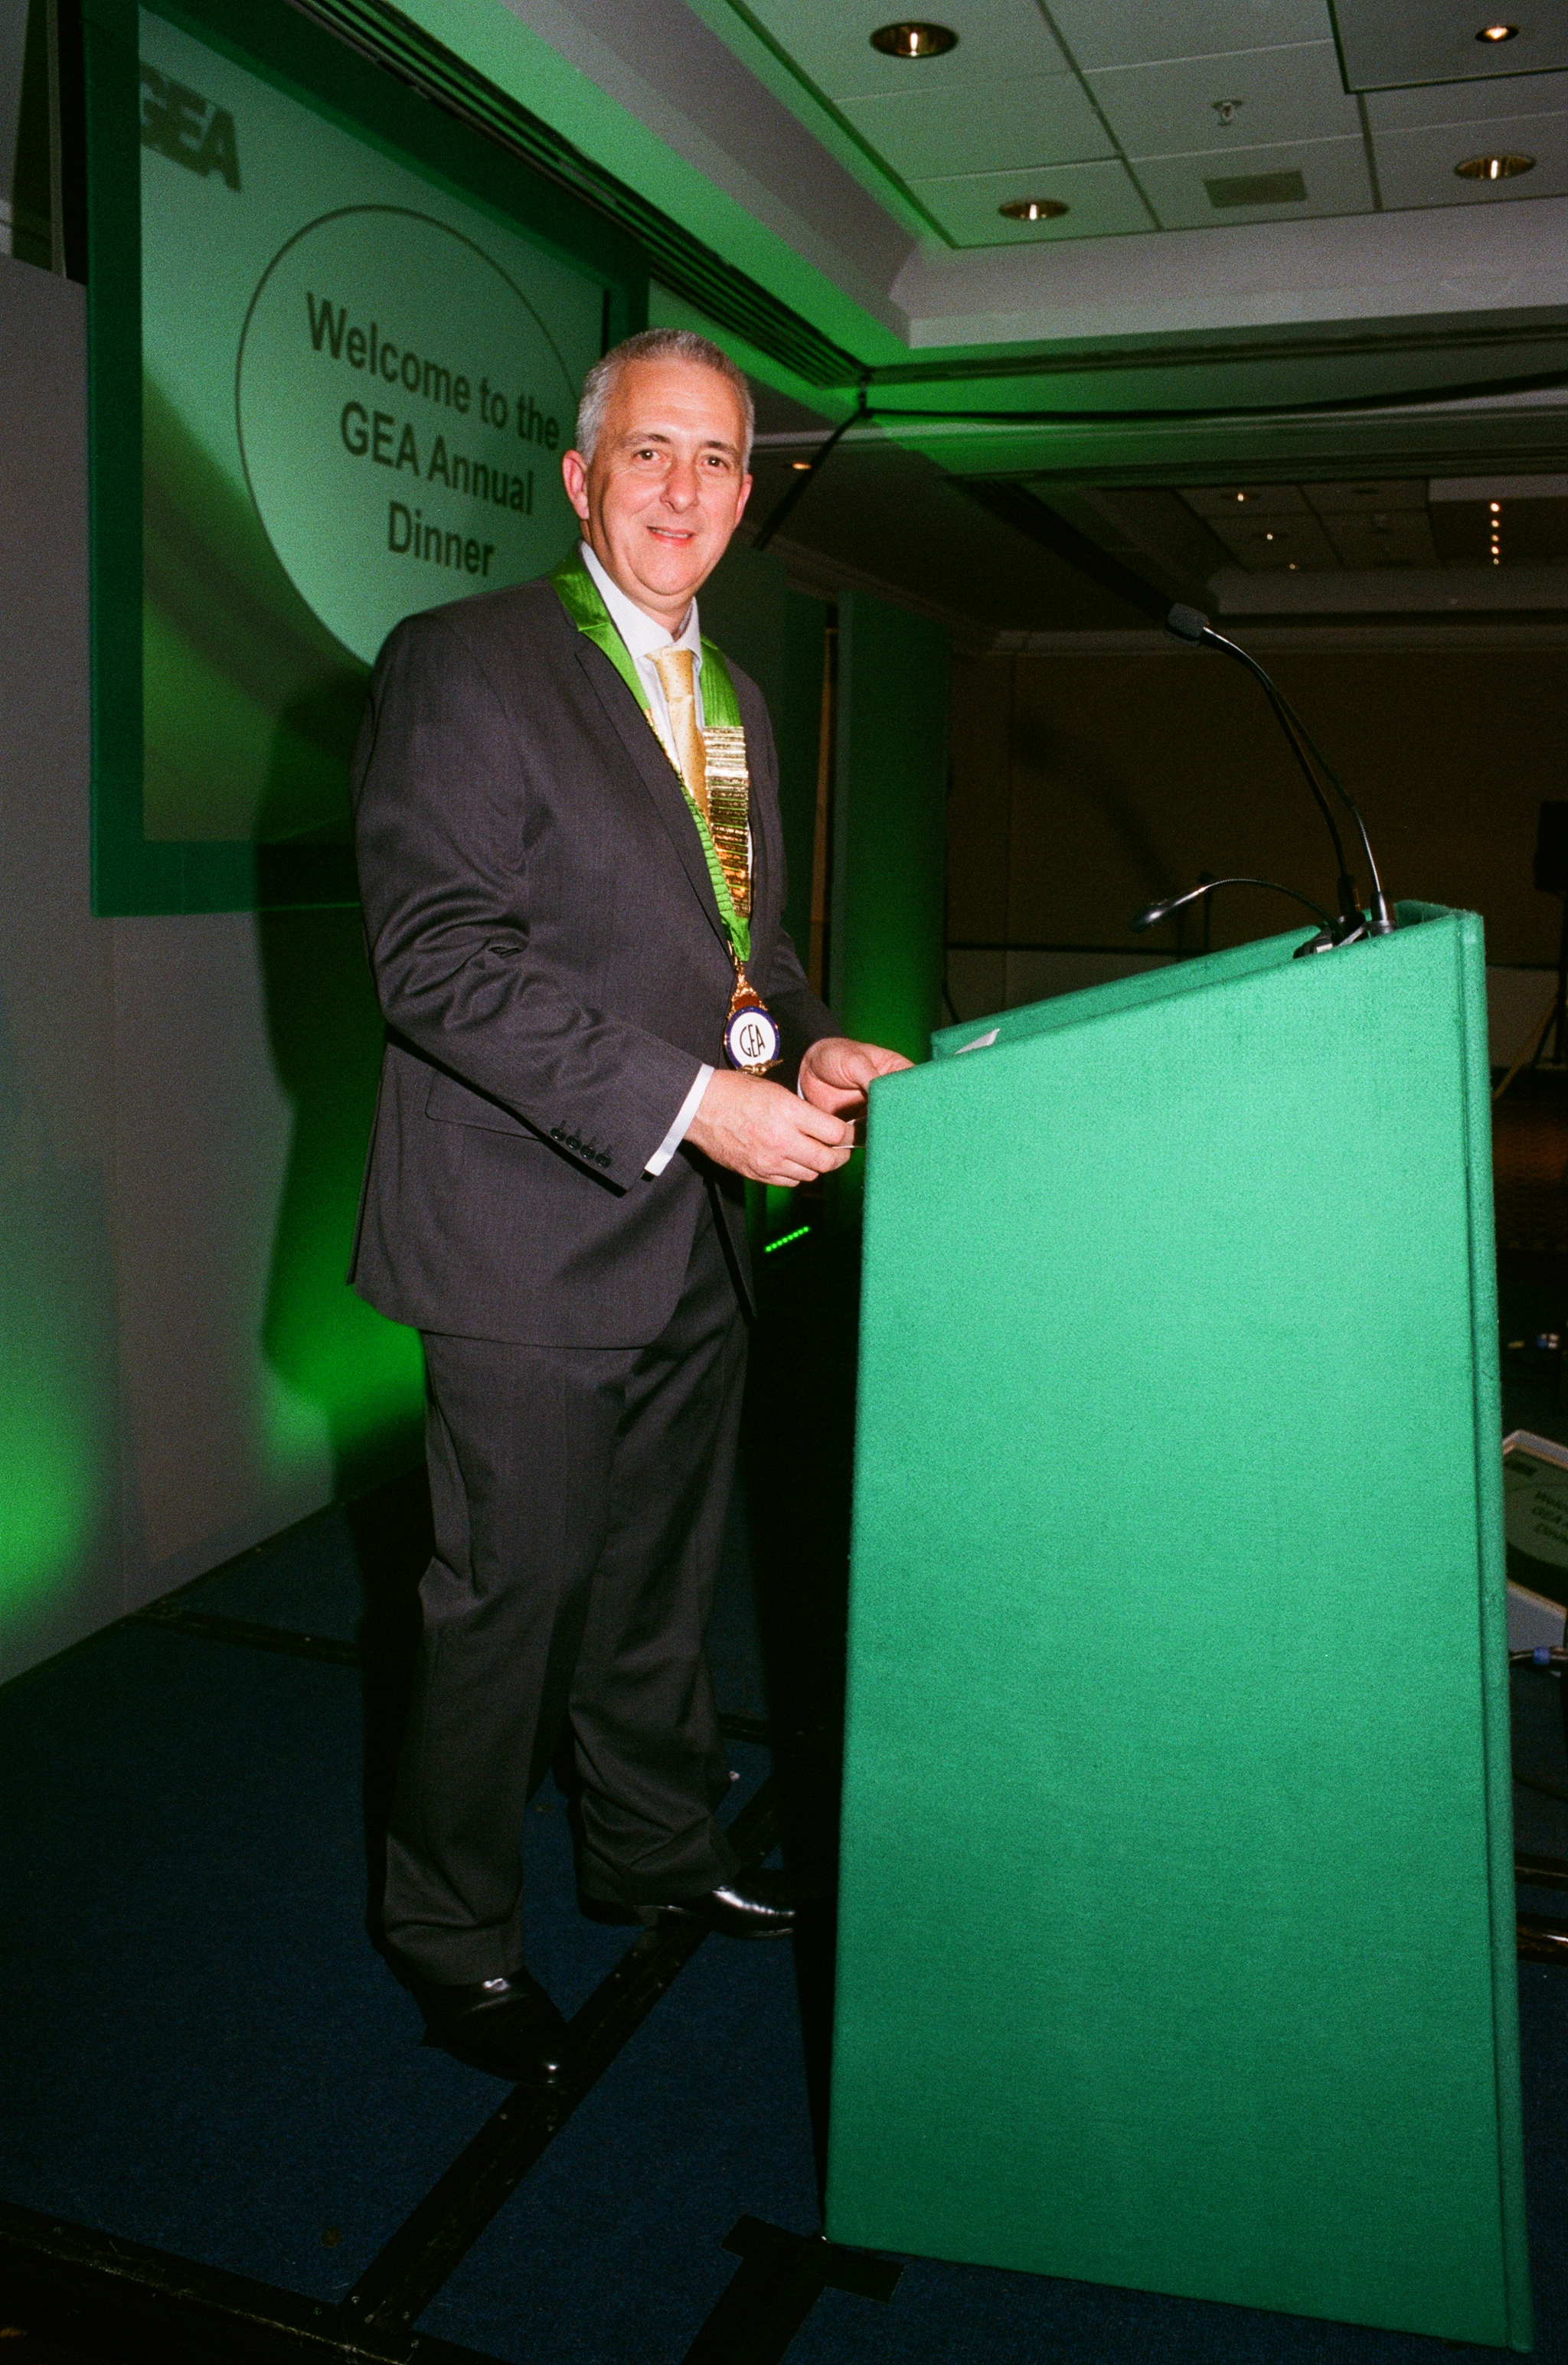 Neil Ebbs president of GEA